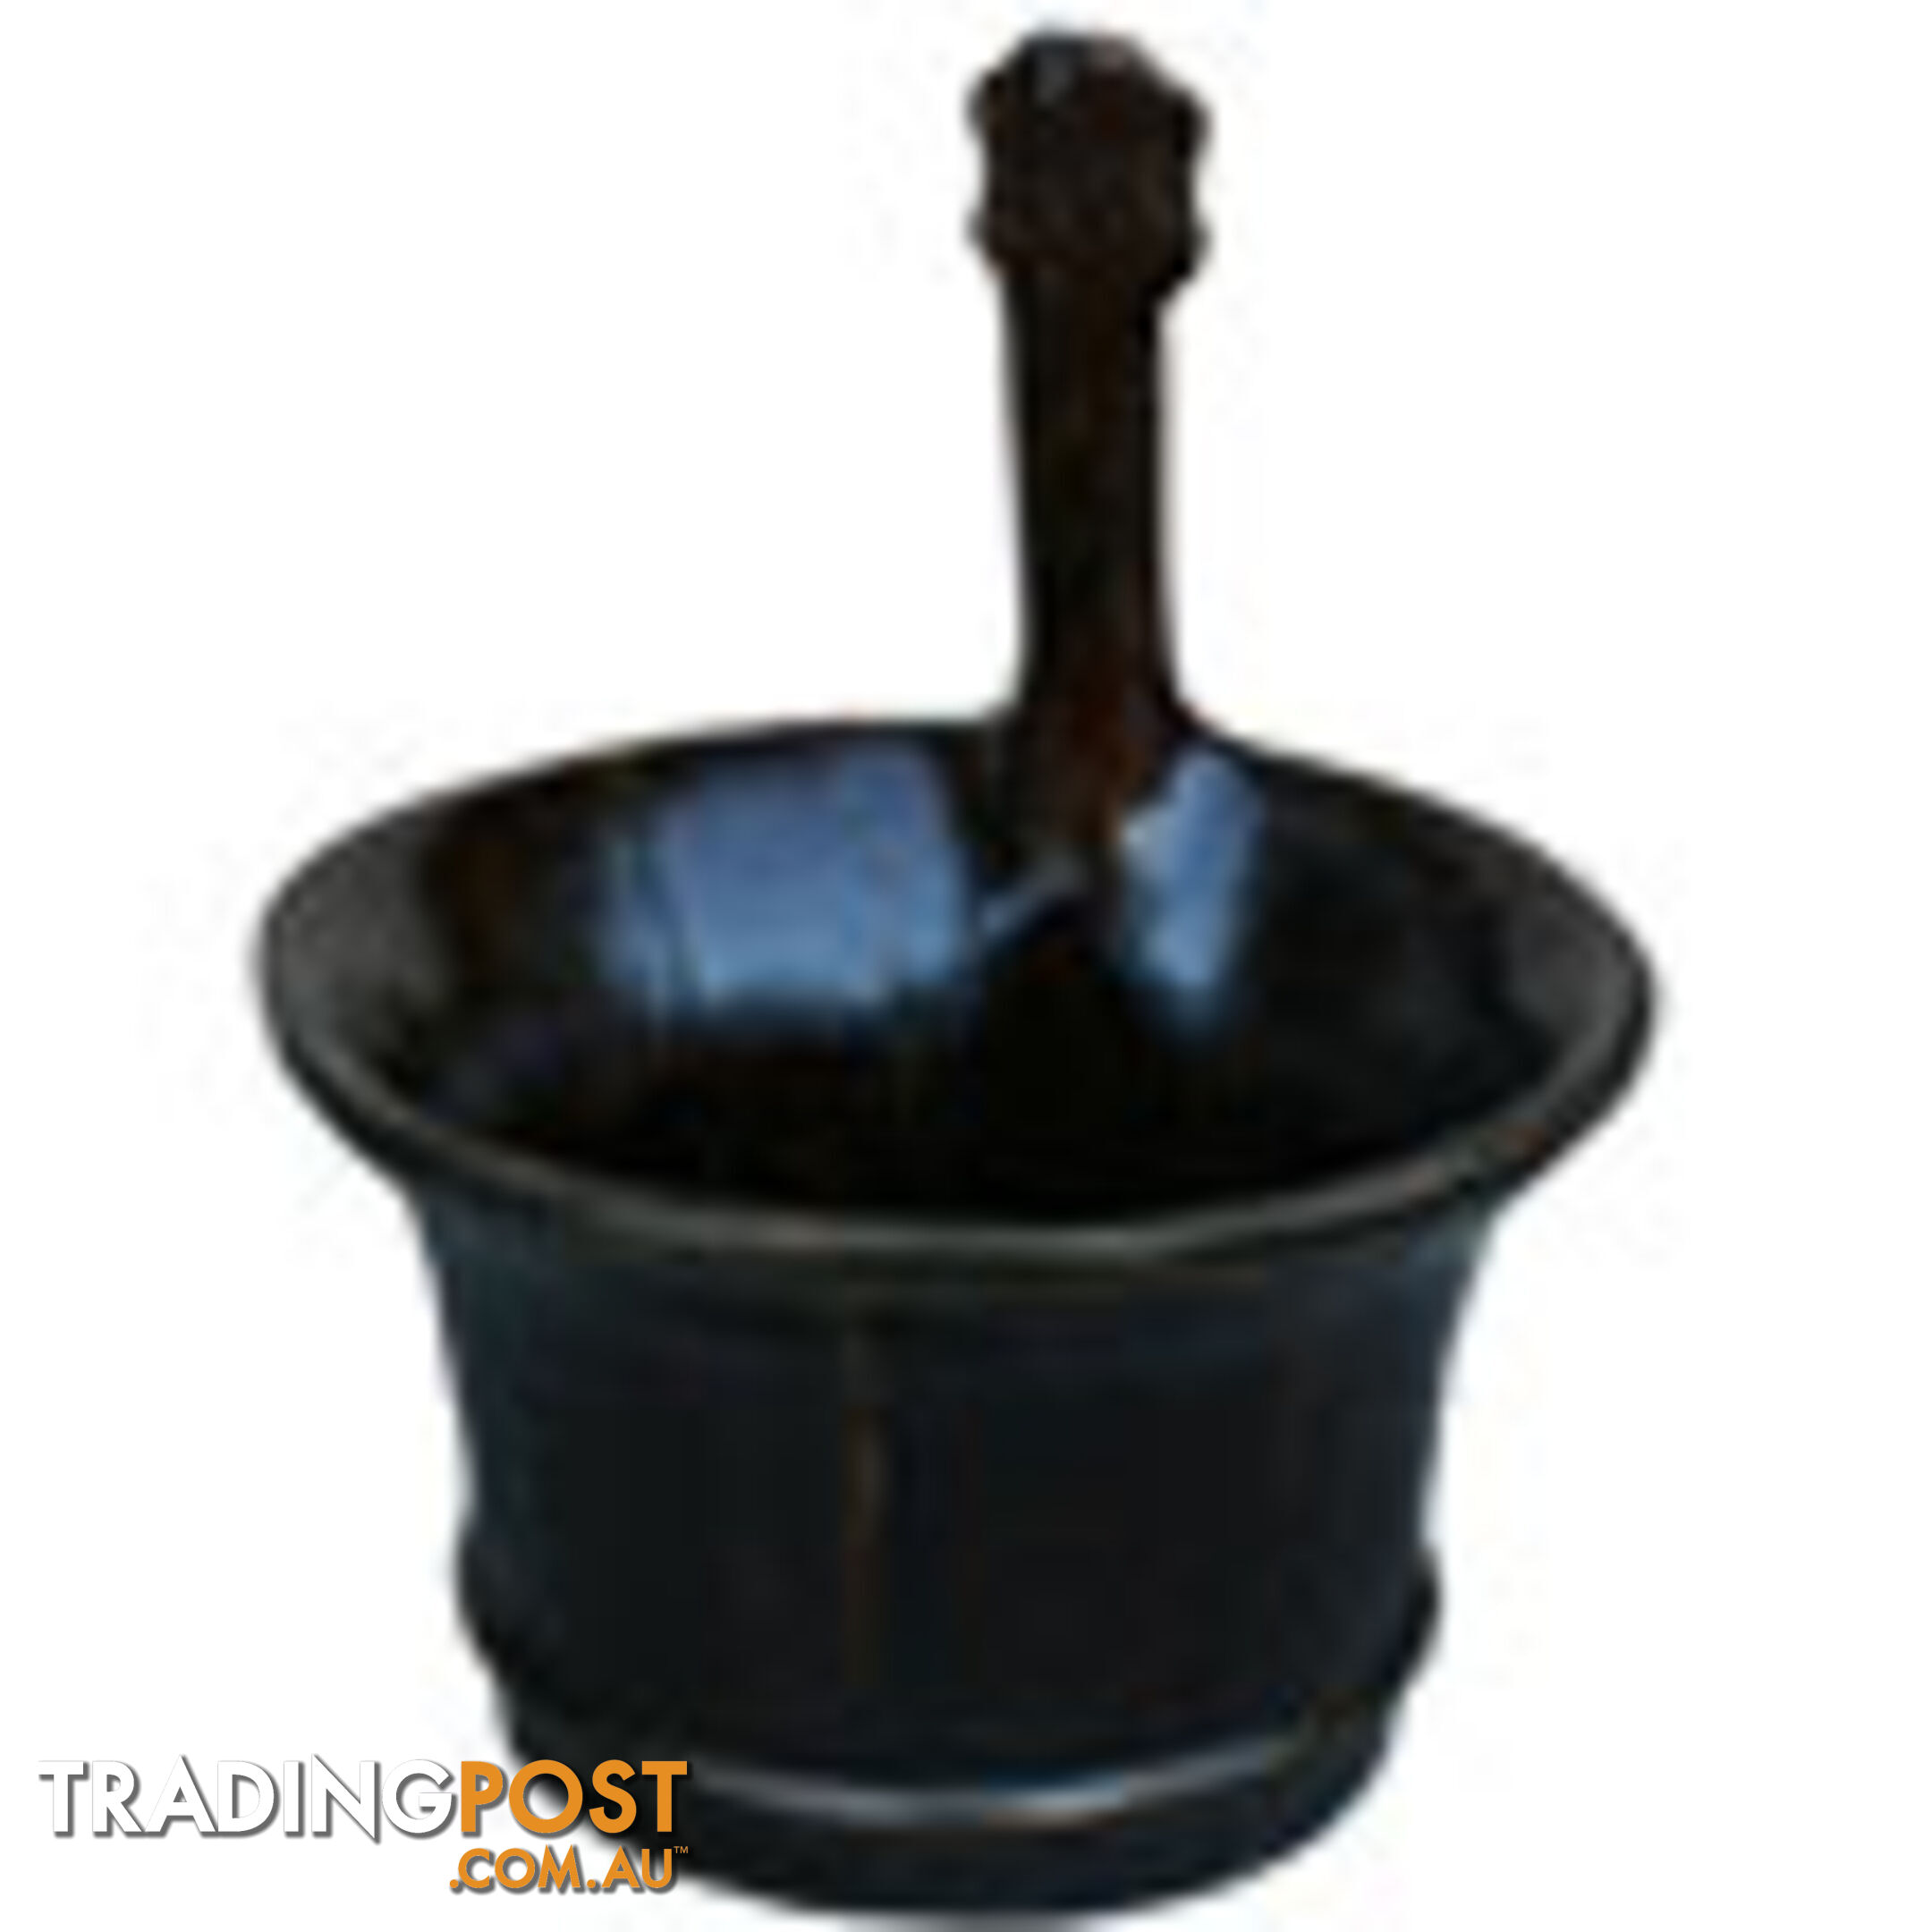 Brown Wood Water Bucket with Handle